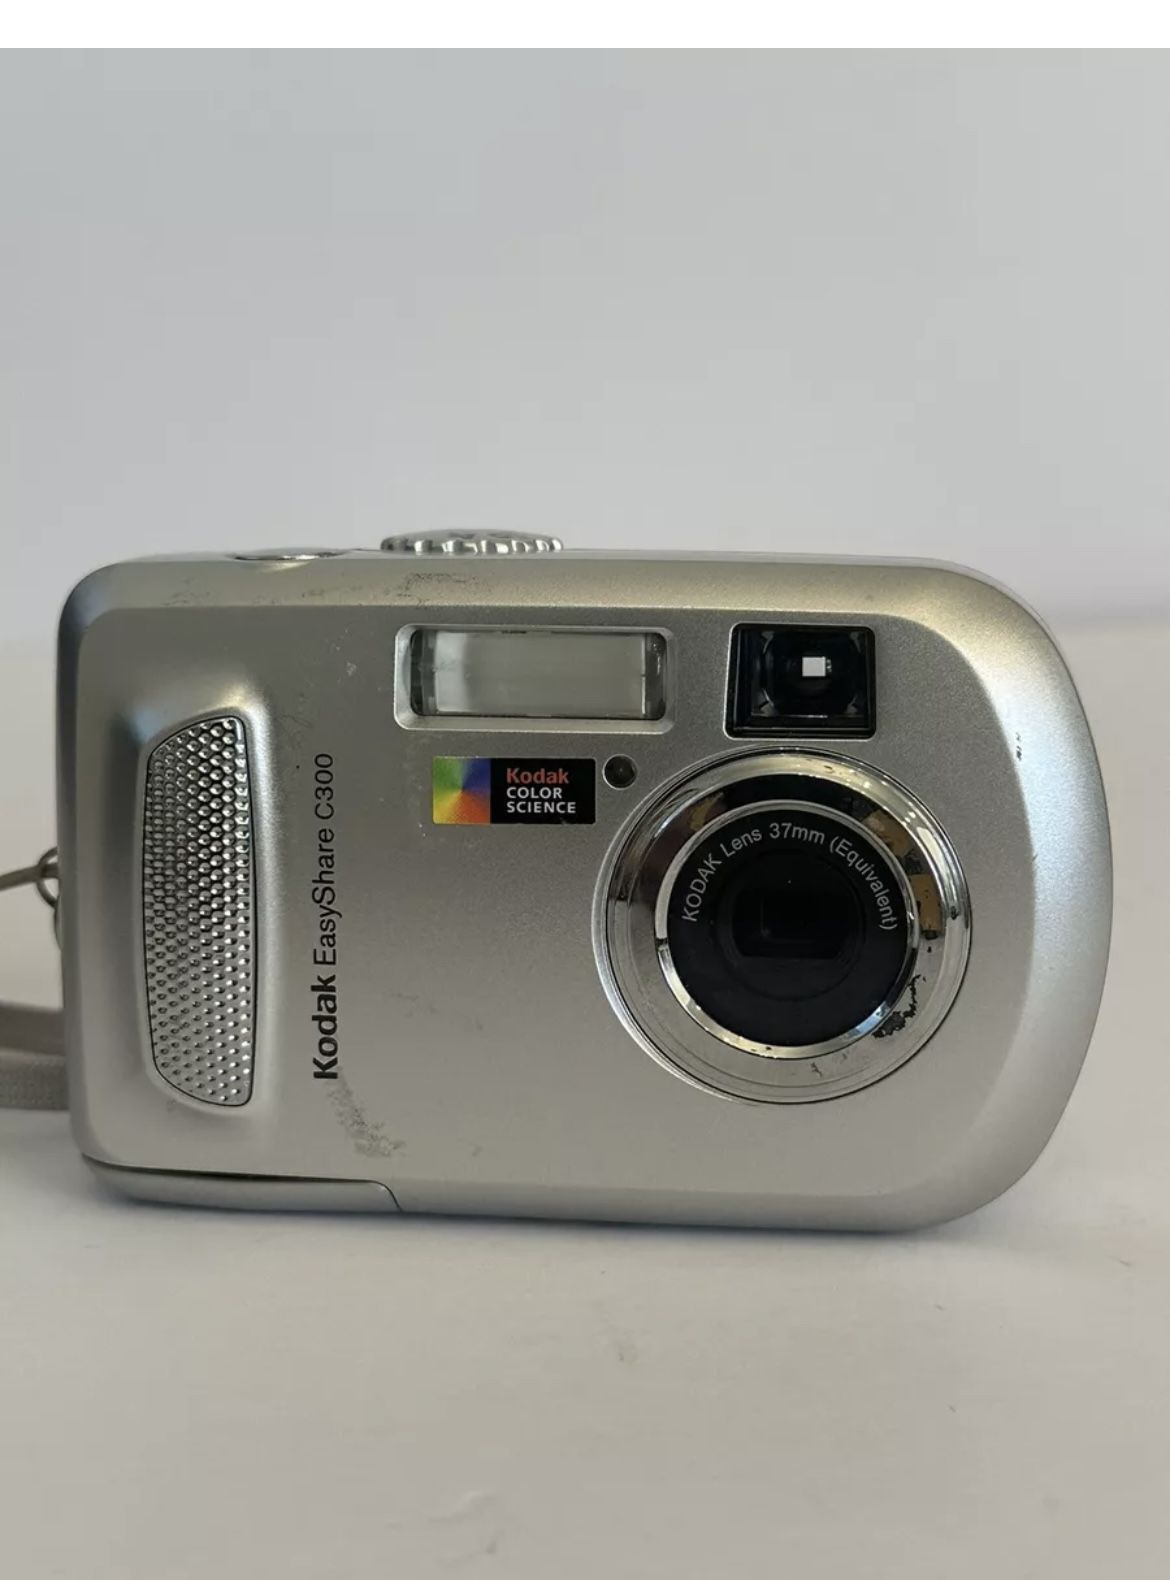 Kodak EasyShare C300 3.2MP Digital Camera - TESTED WORKS Screen Has Dead Pixels